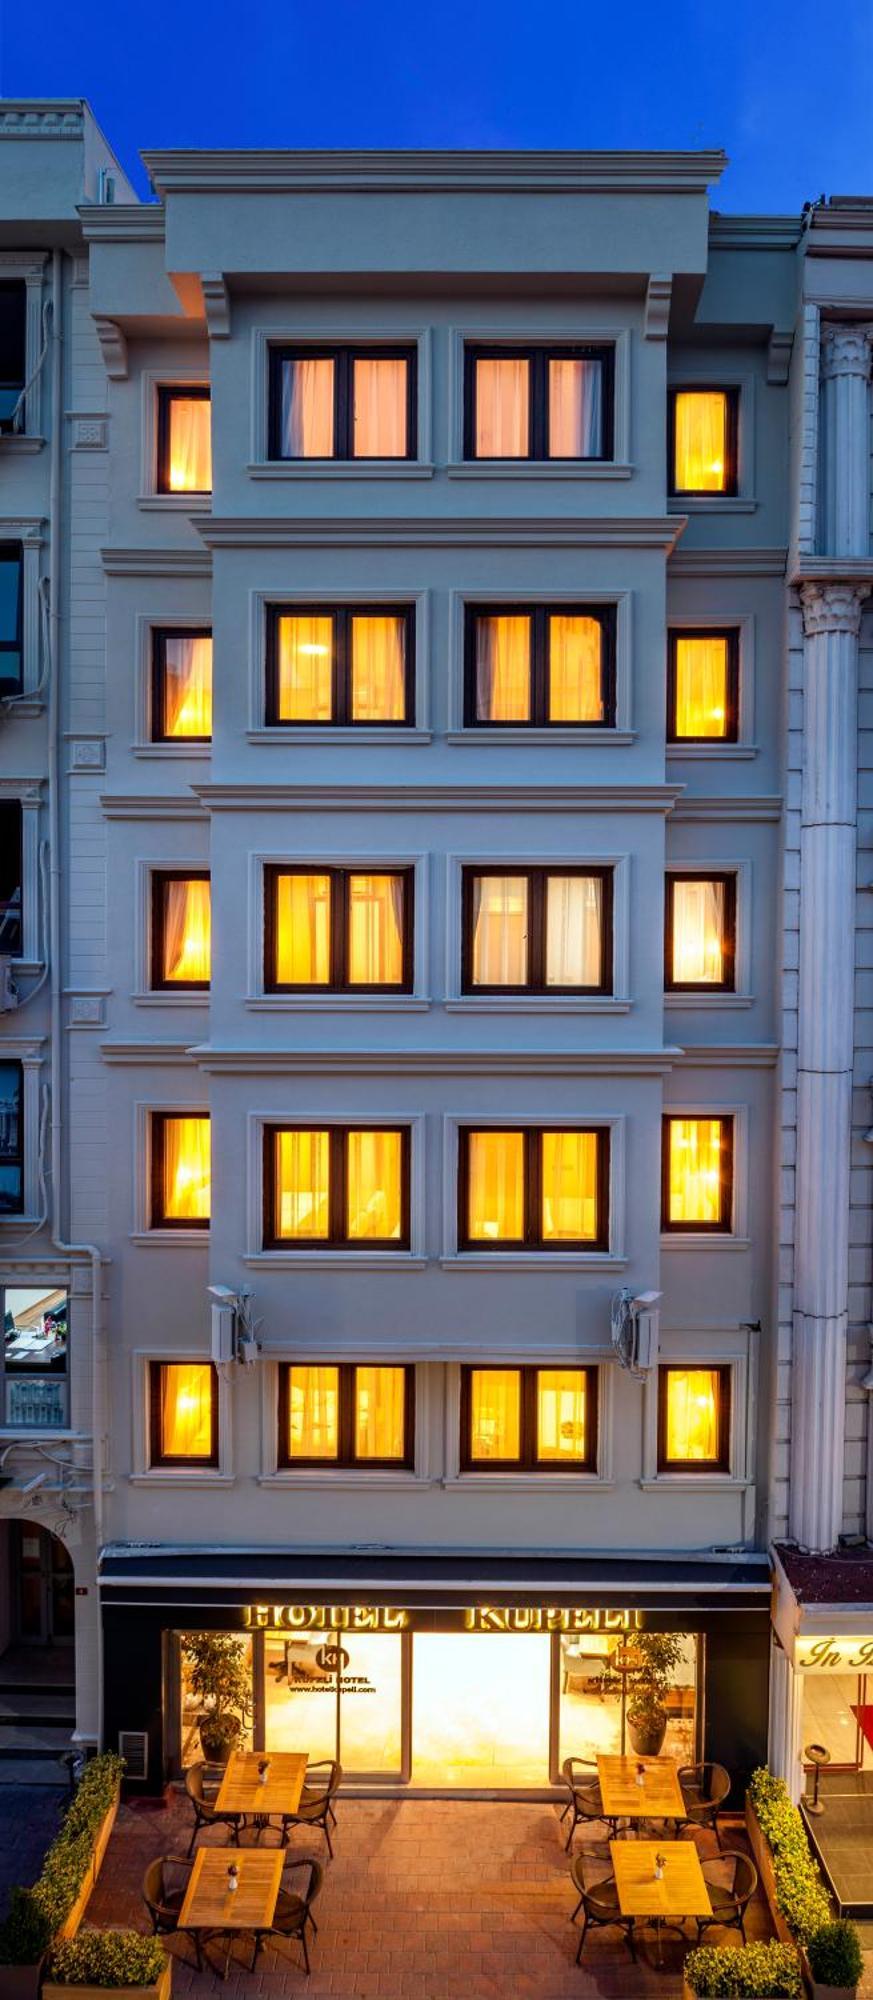 Kupeli Hotel Istanbul Exterior photo